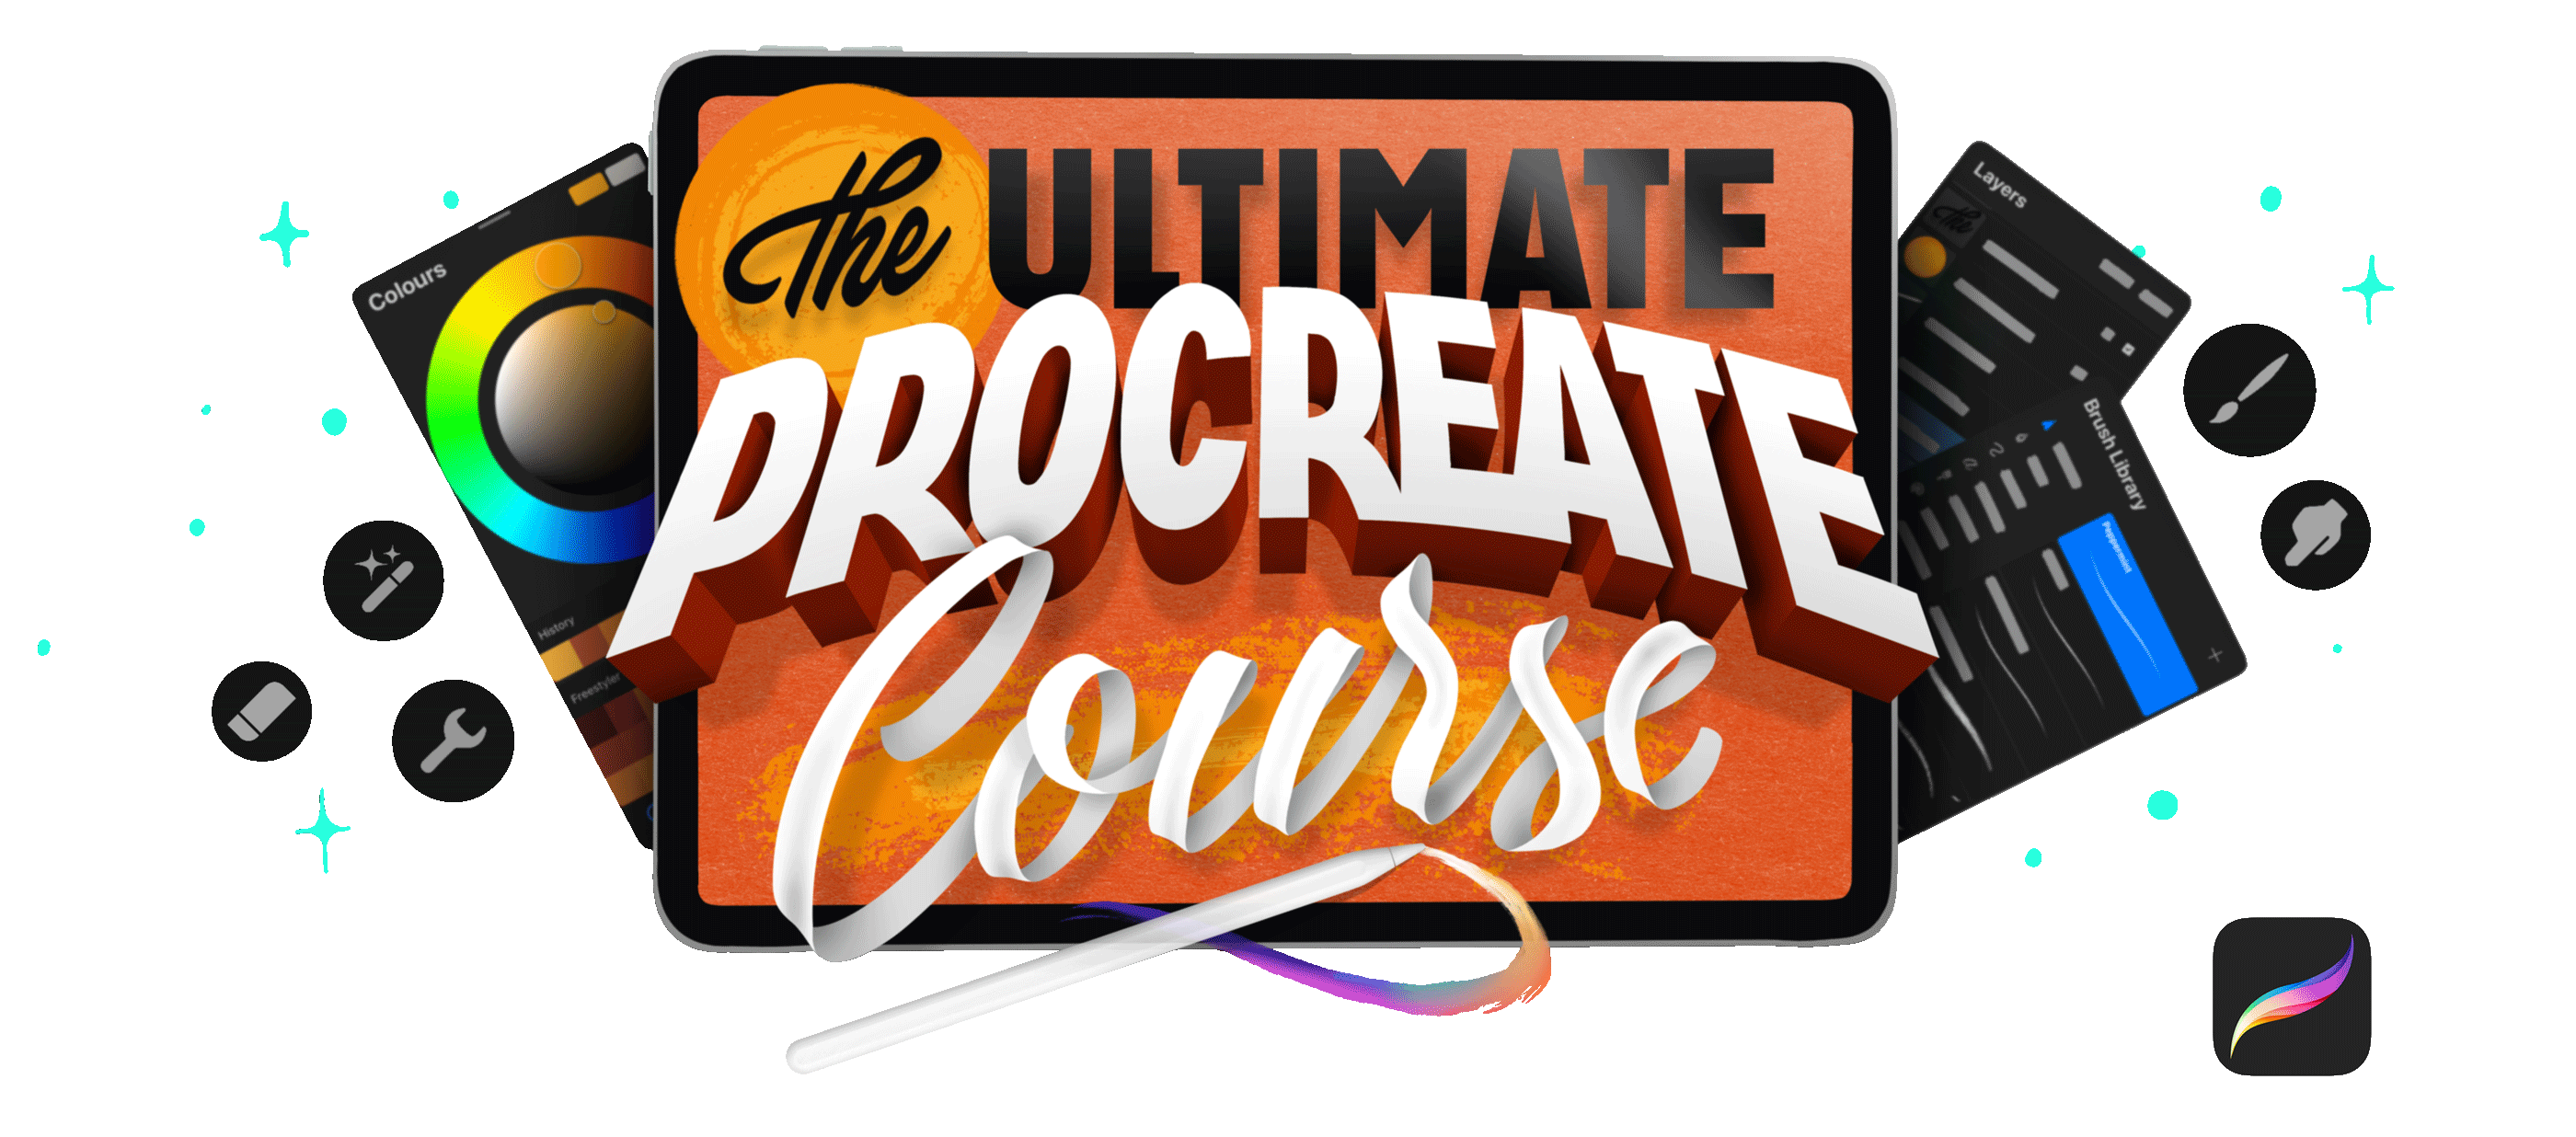 The Ultimate Procreate Course Thumbnail